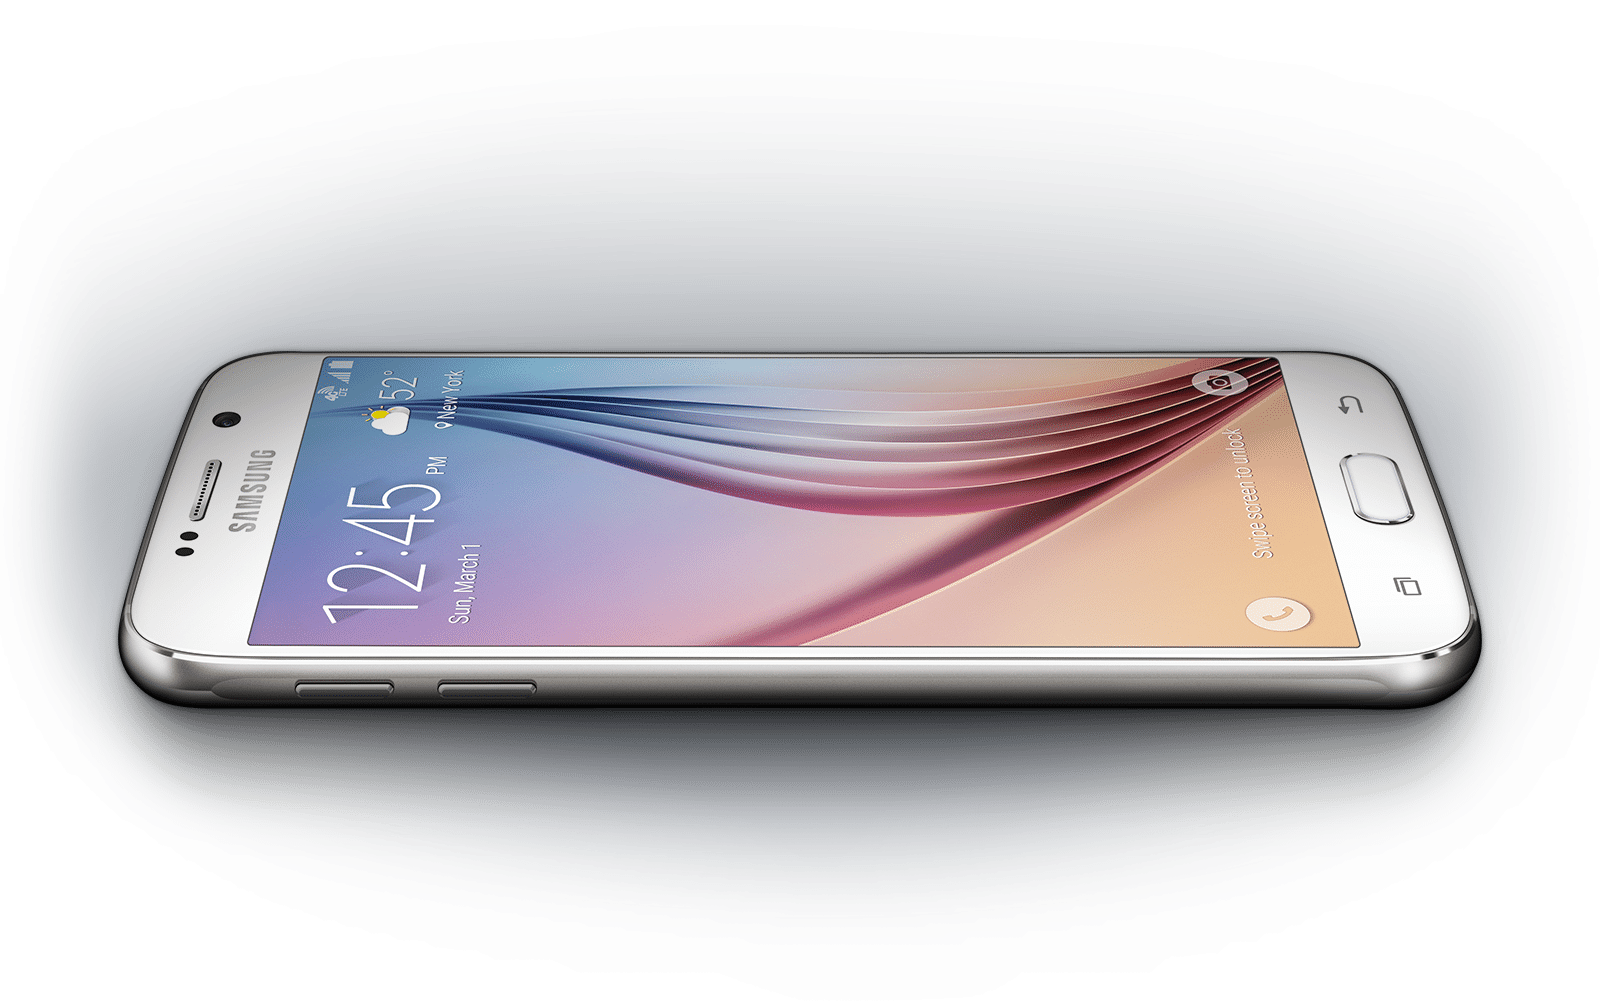 Galaxy s6 экран. Samsung Galaxy s6. Смартфон самсунг галакси а6. Samsung Galaxy s6 SM-g920f 32gb. Samsung Galaxy s6 2015.